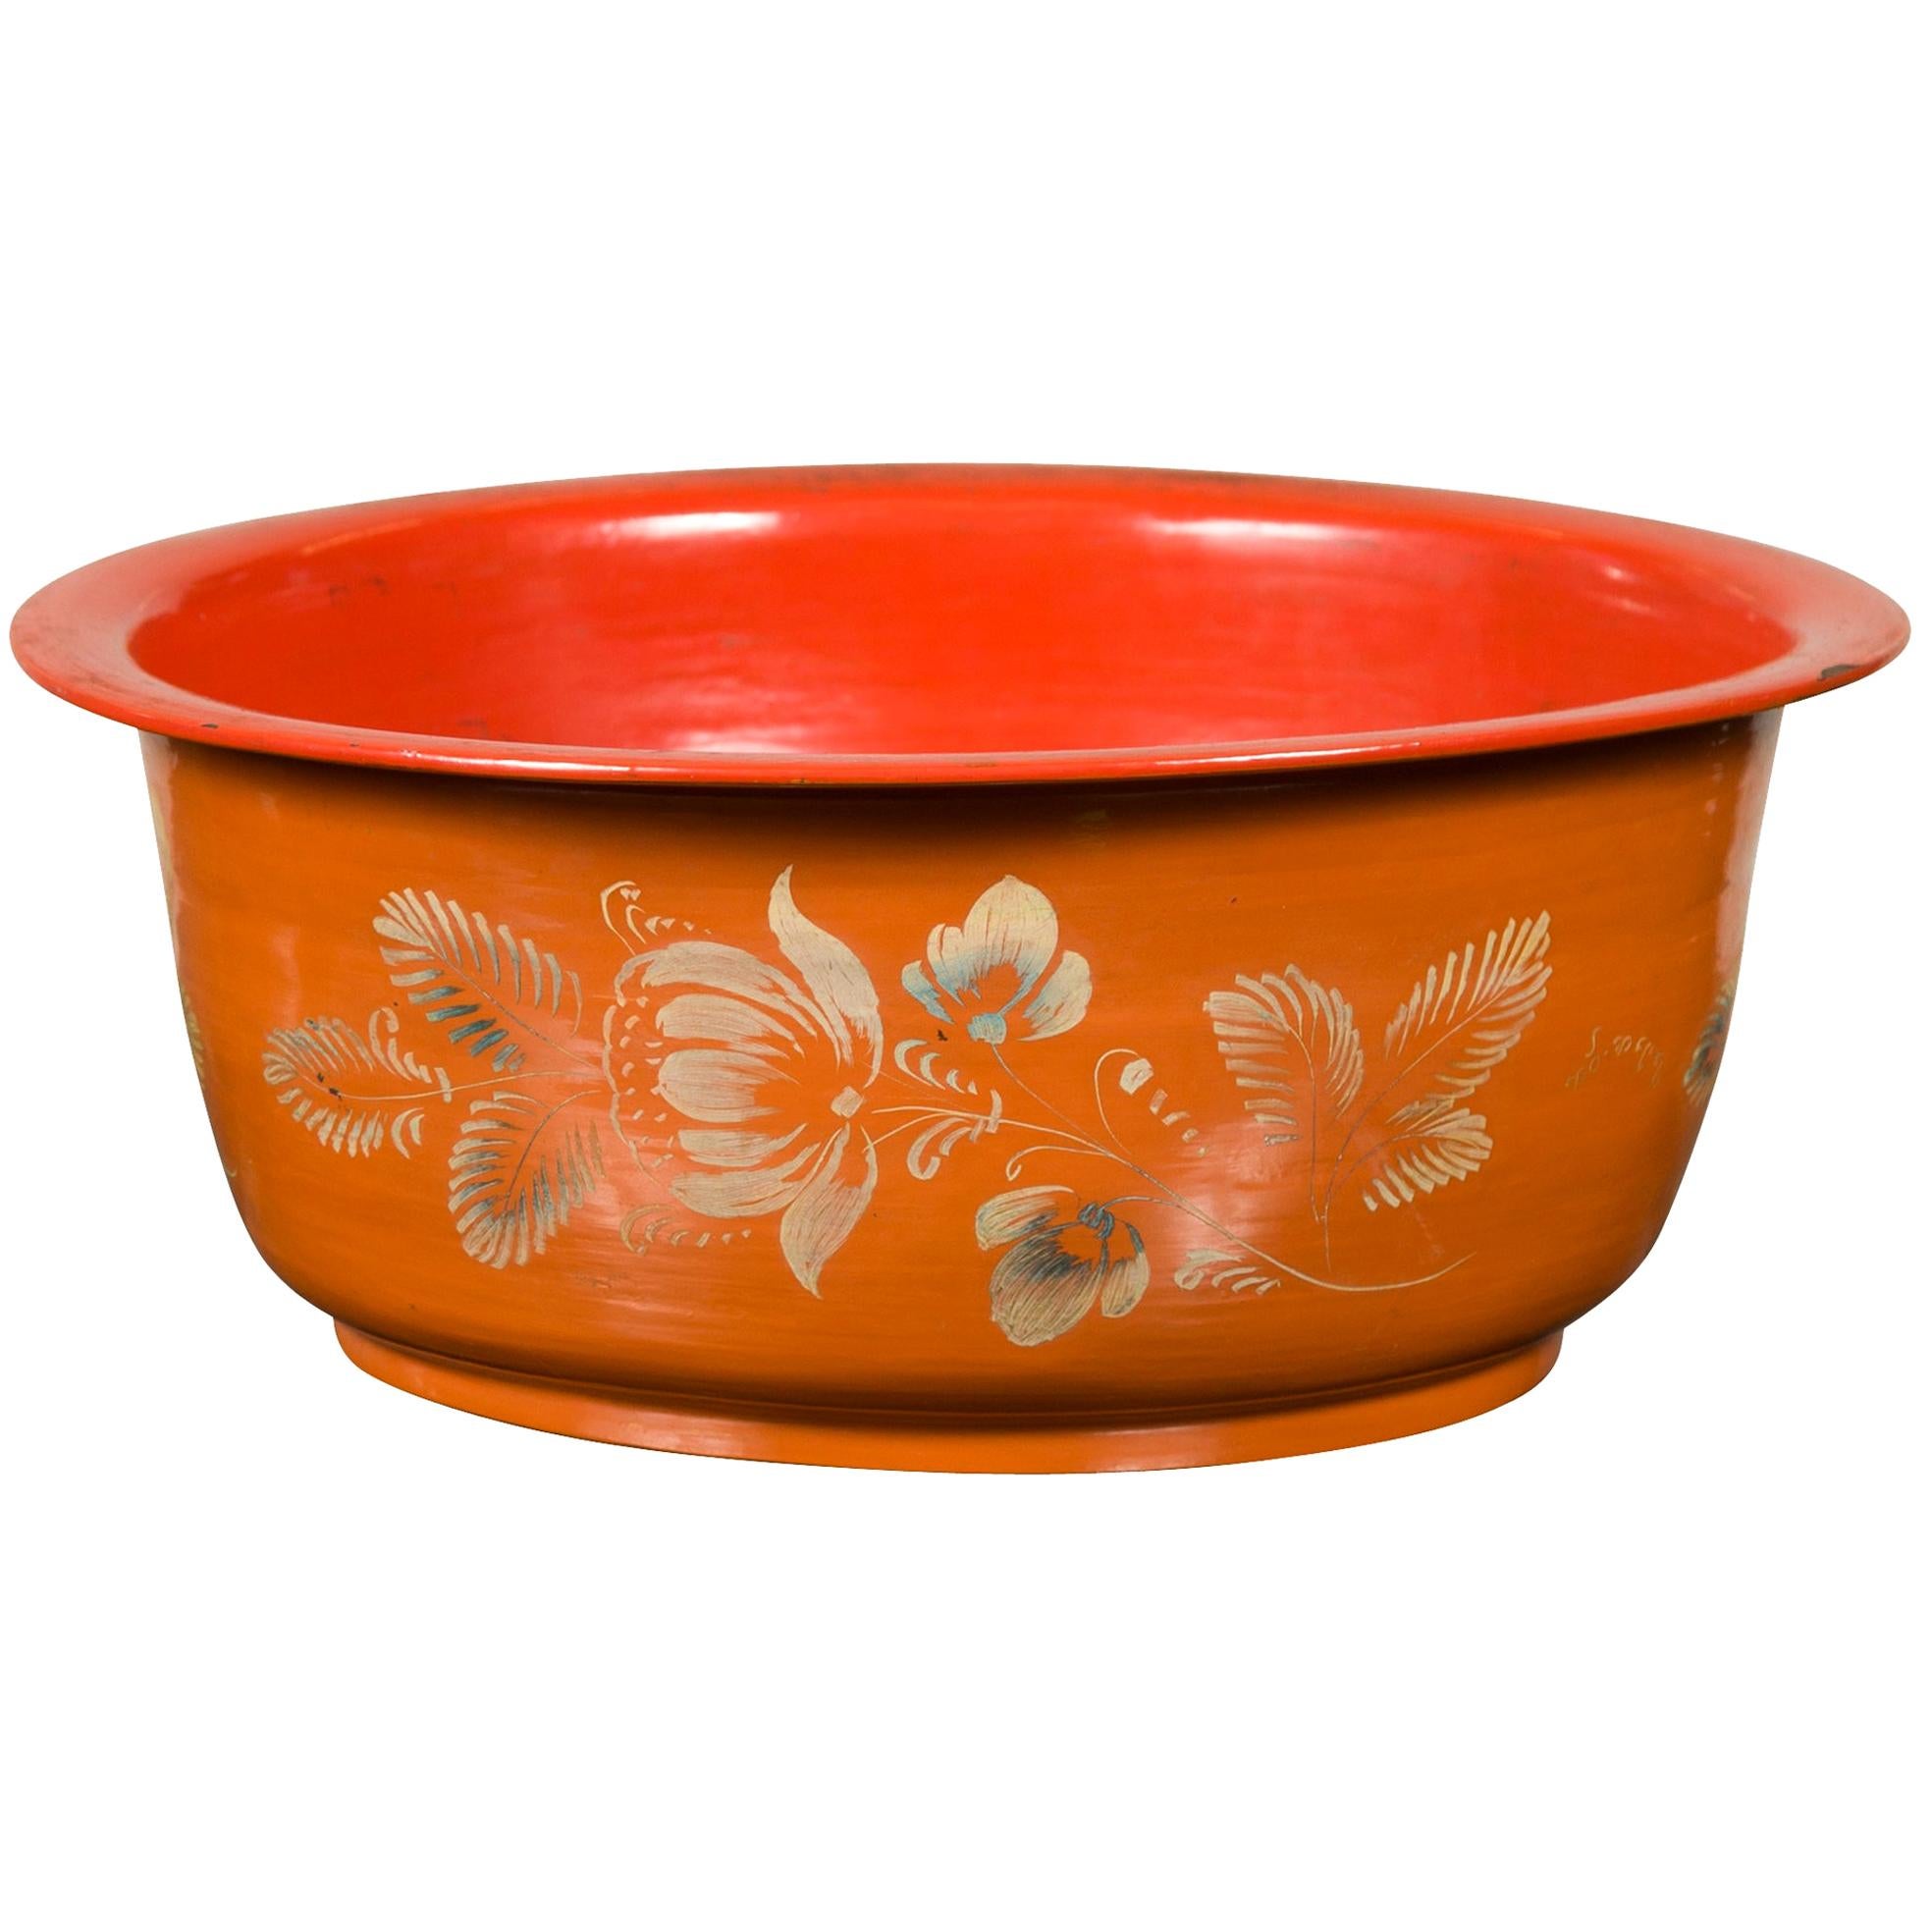 Vintage Burmese Orange and Red Lacquered Papier Mâché Bowl with Floral Design